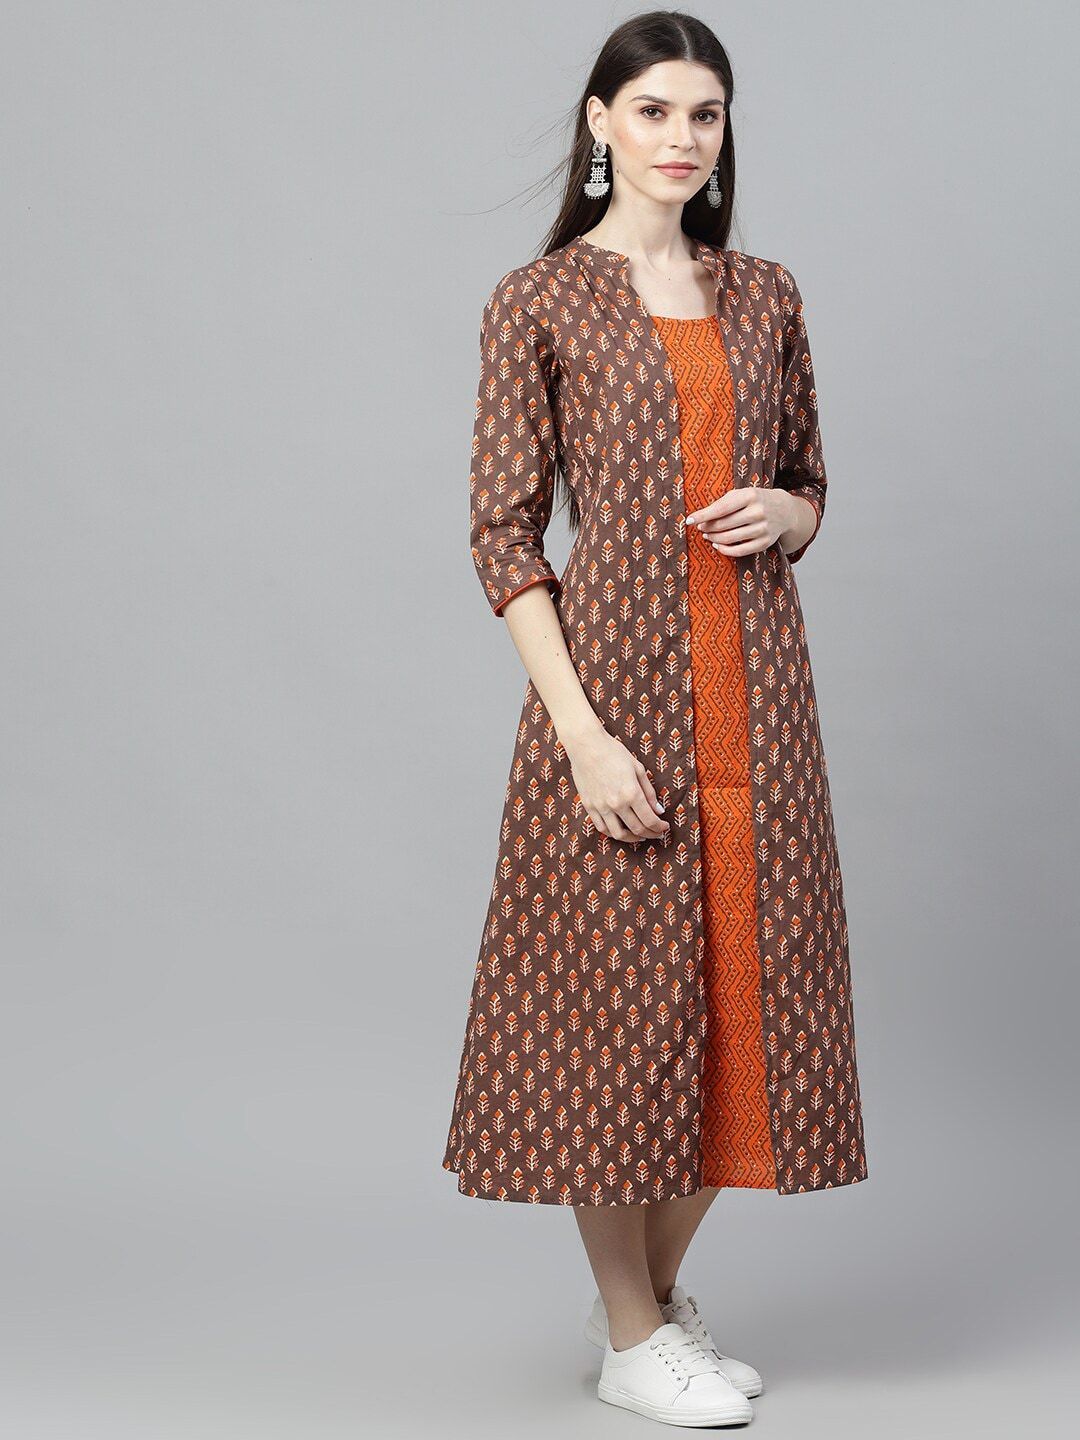 Women's  Brown Printed A-Line Dress - AKS